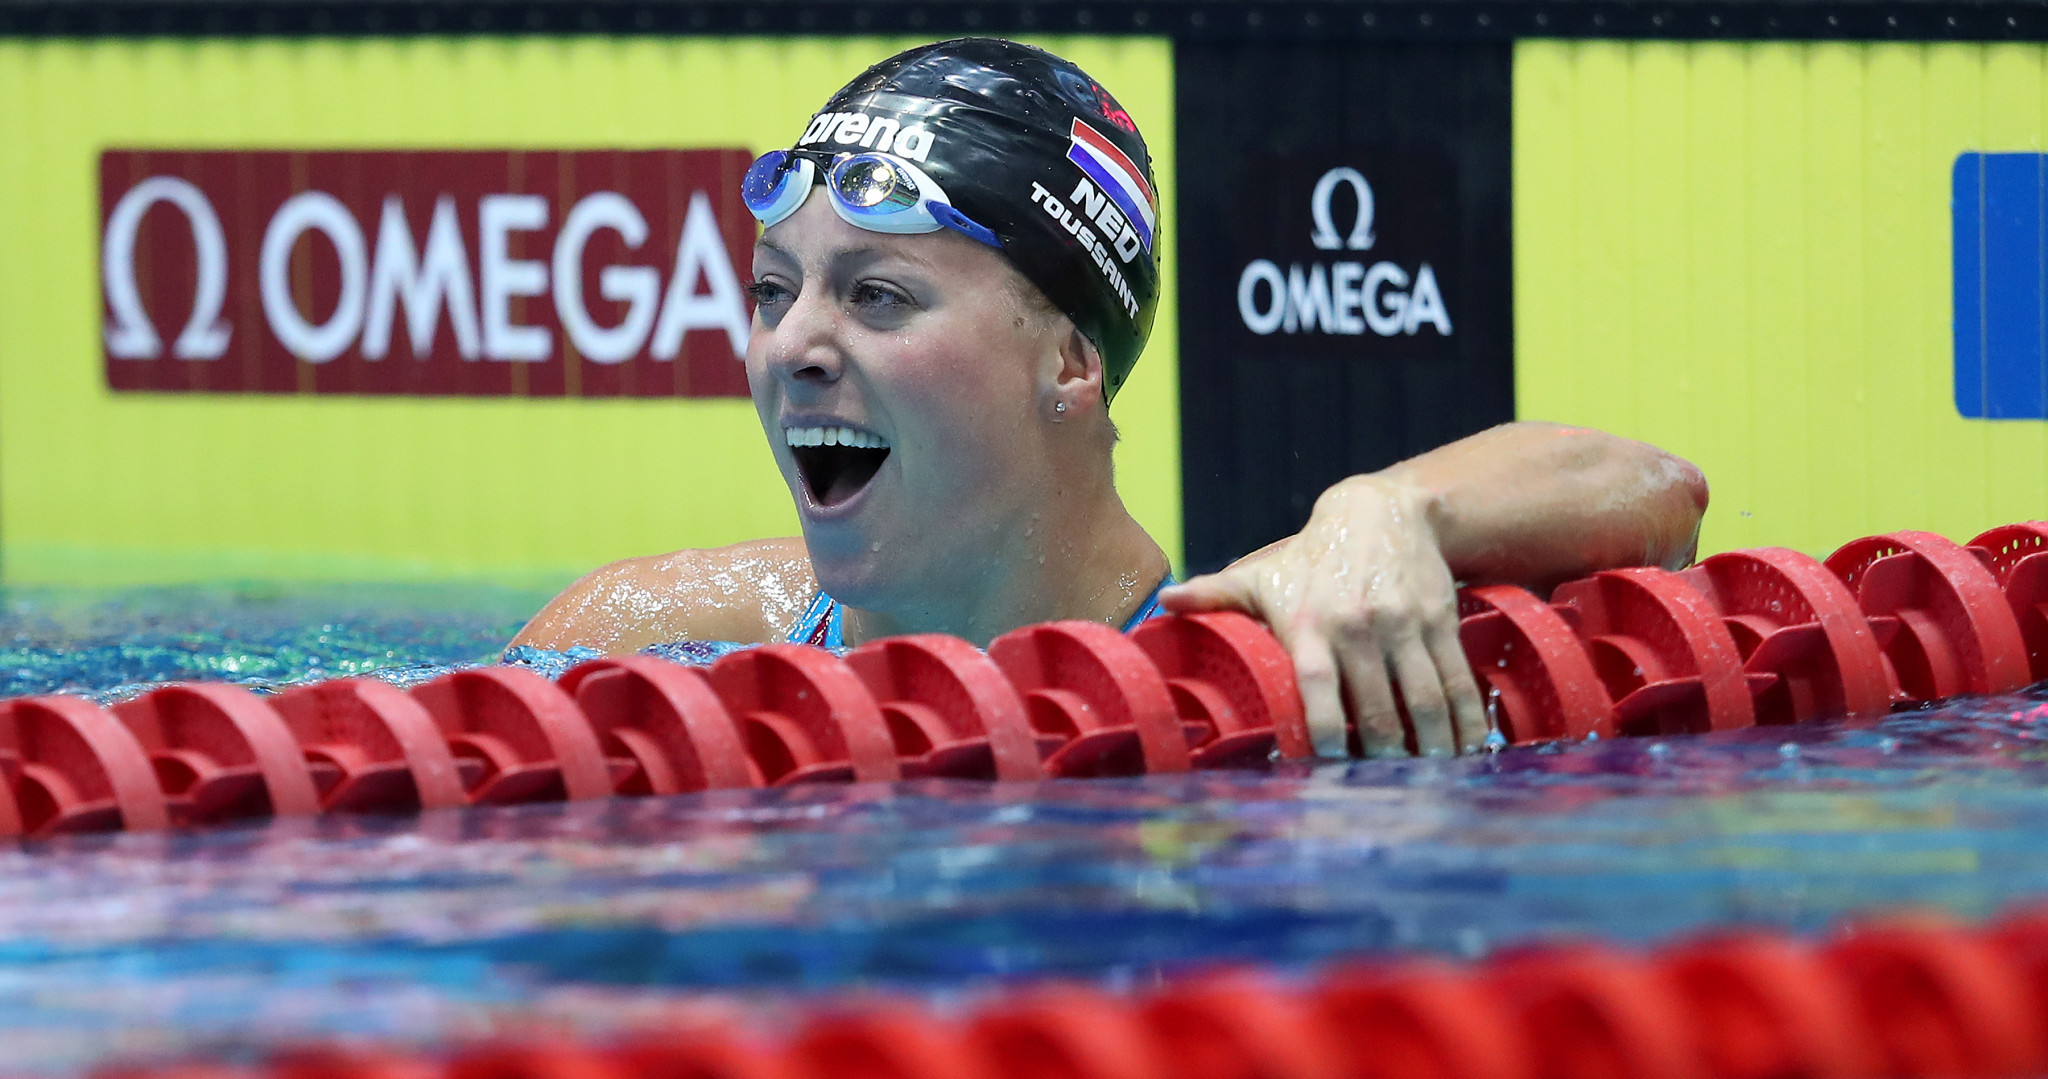 Dutch swimmer Kira Toussaint won the women's 100m backstroke to deny Katinka Hosszú ©Getty Images